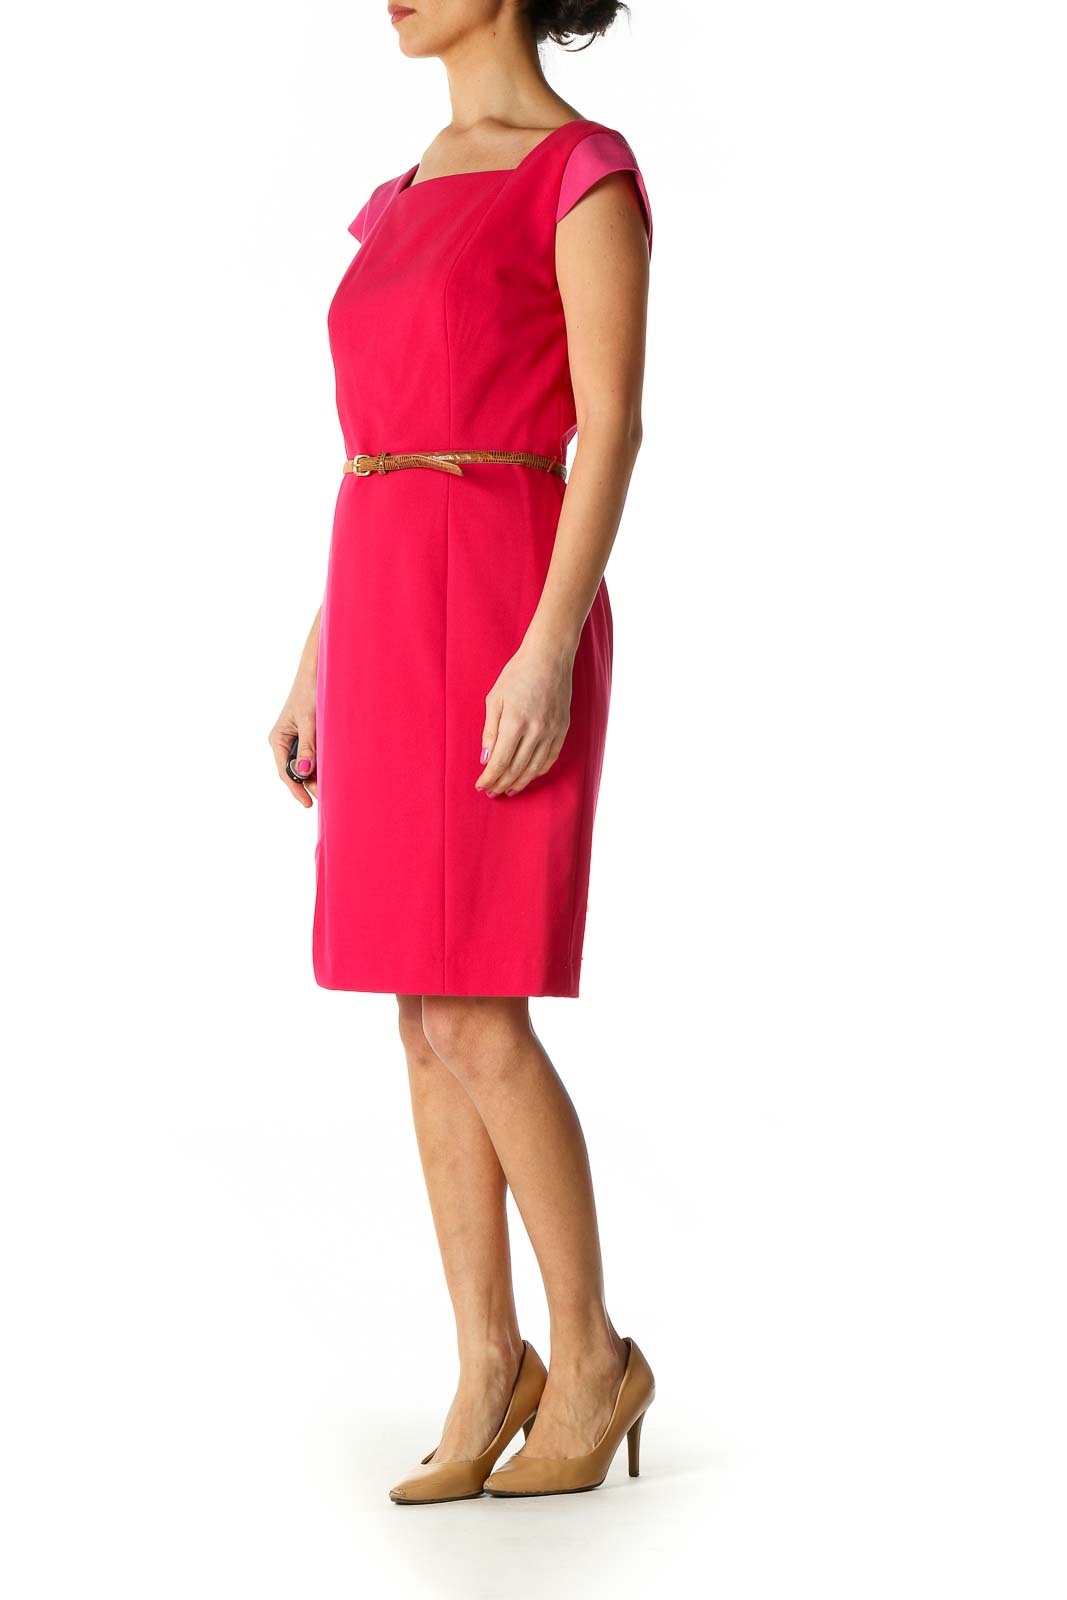 Calvin Klein - Red Solid Sheath Dress Polyester Spandex Rayon | SilkRoll